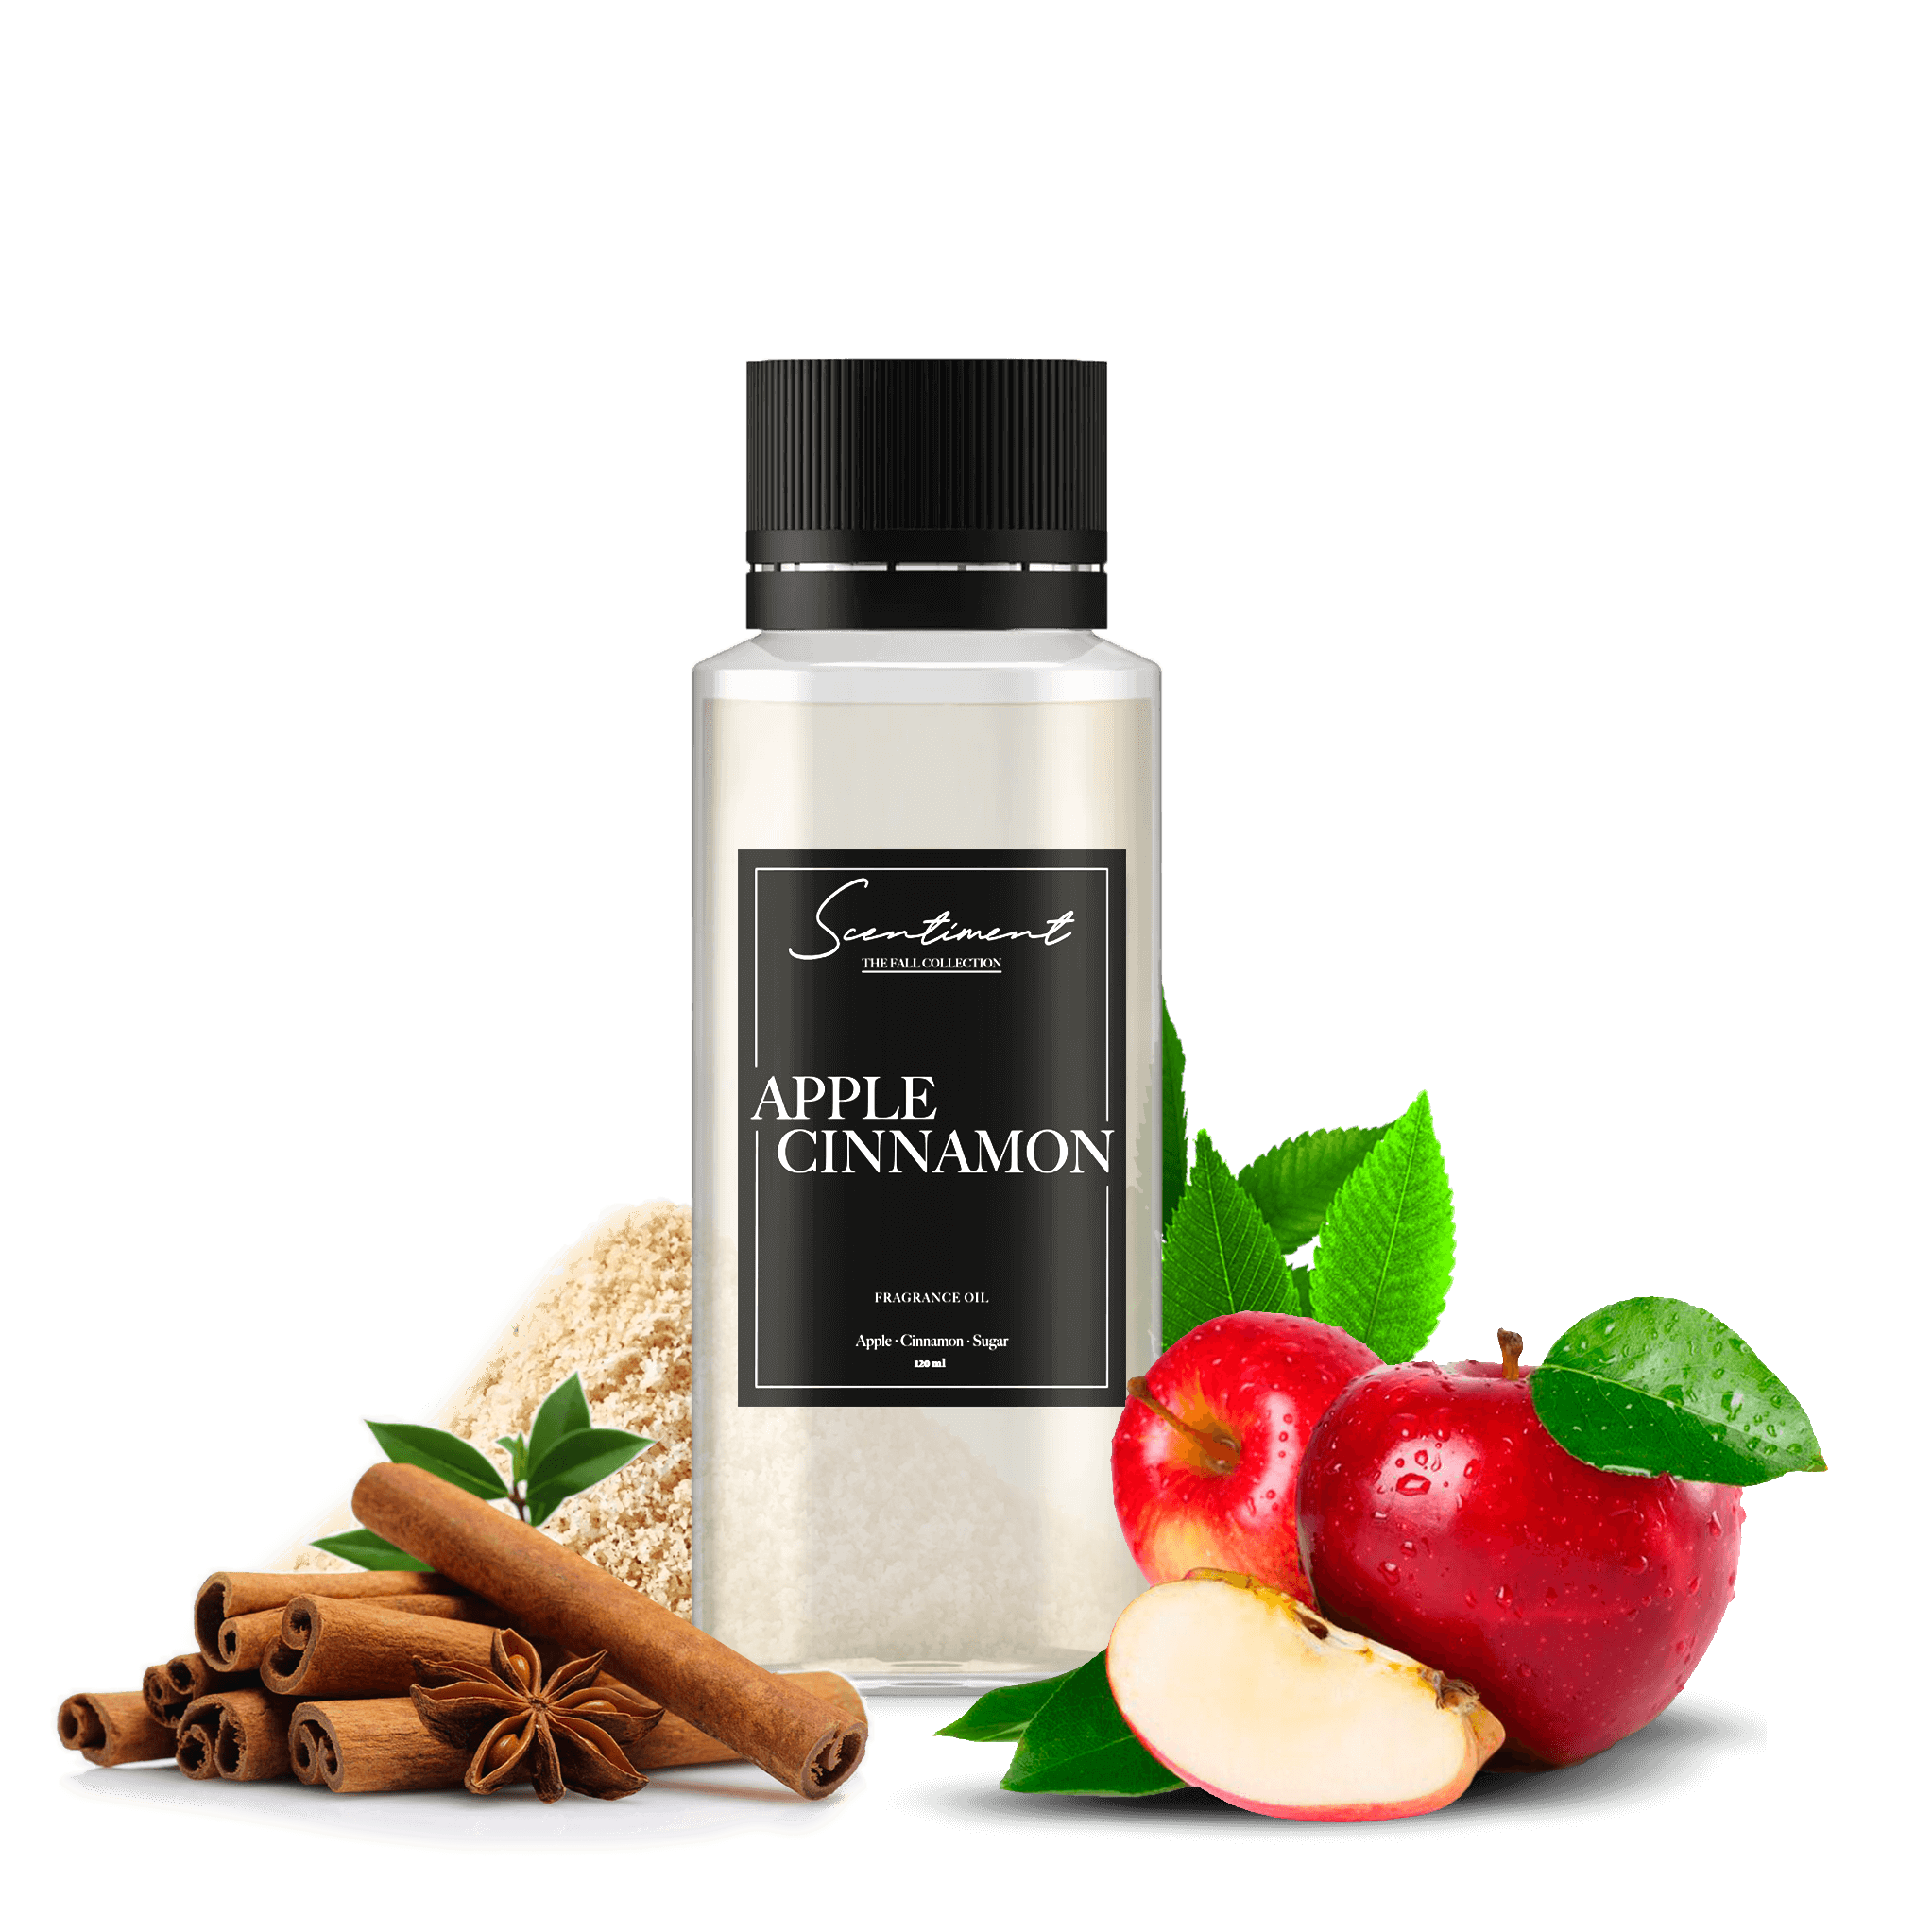 Aromar Premium Fragrance Oil - 2 oz. Apple Cinnamon Scented Oil